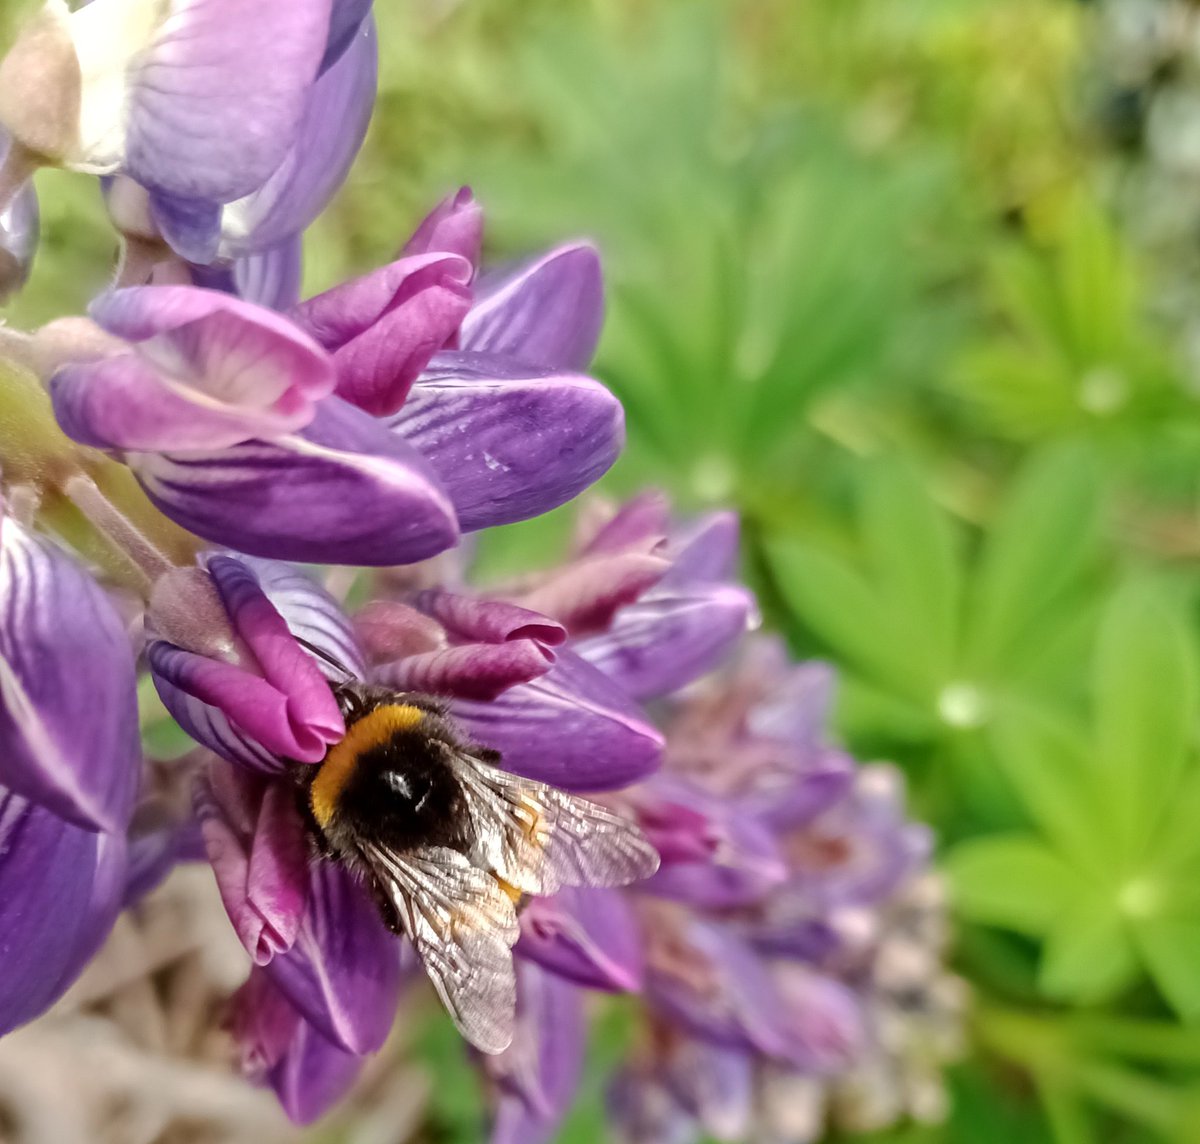 Bees definitely enjoying the lupins #pollinators #garden